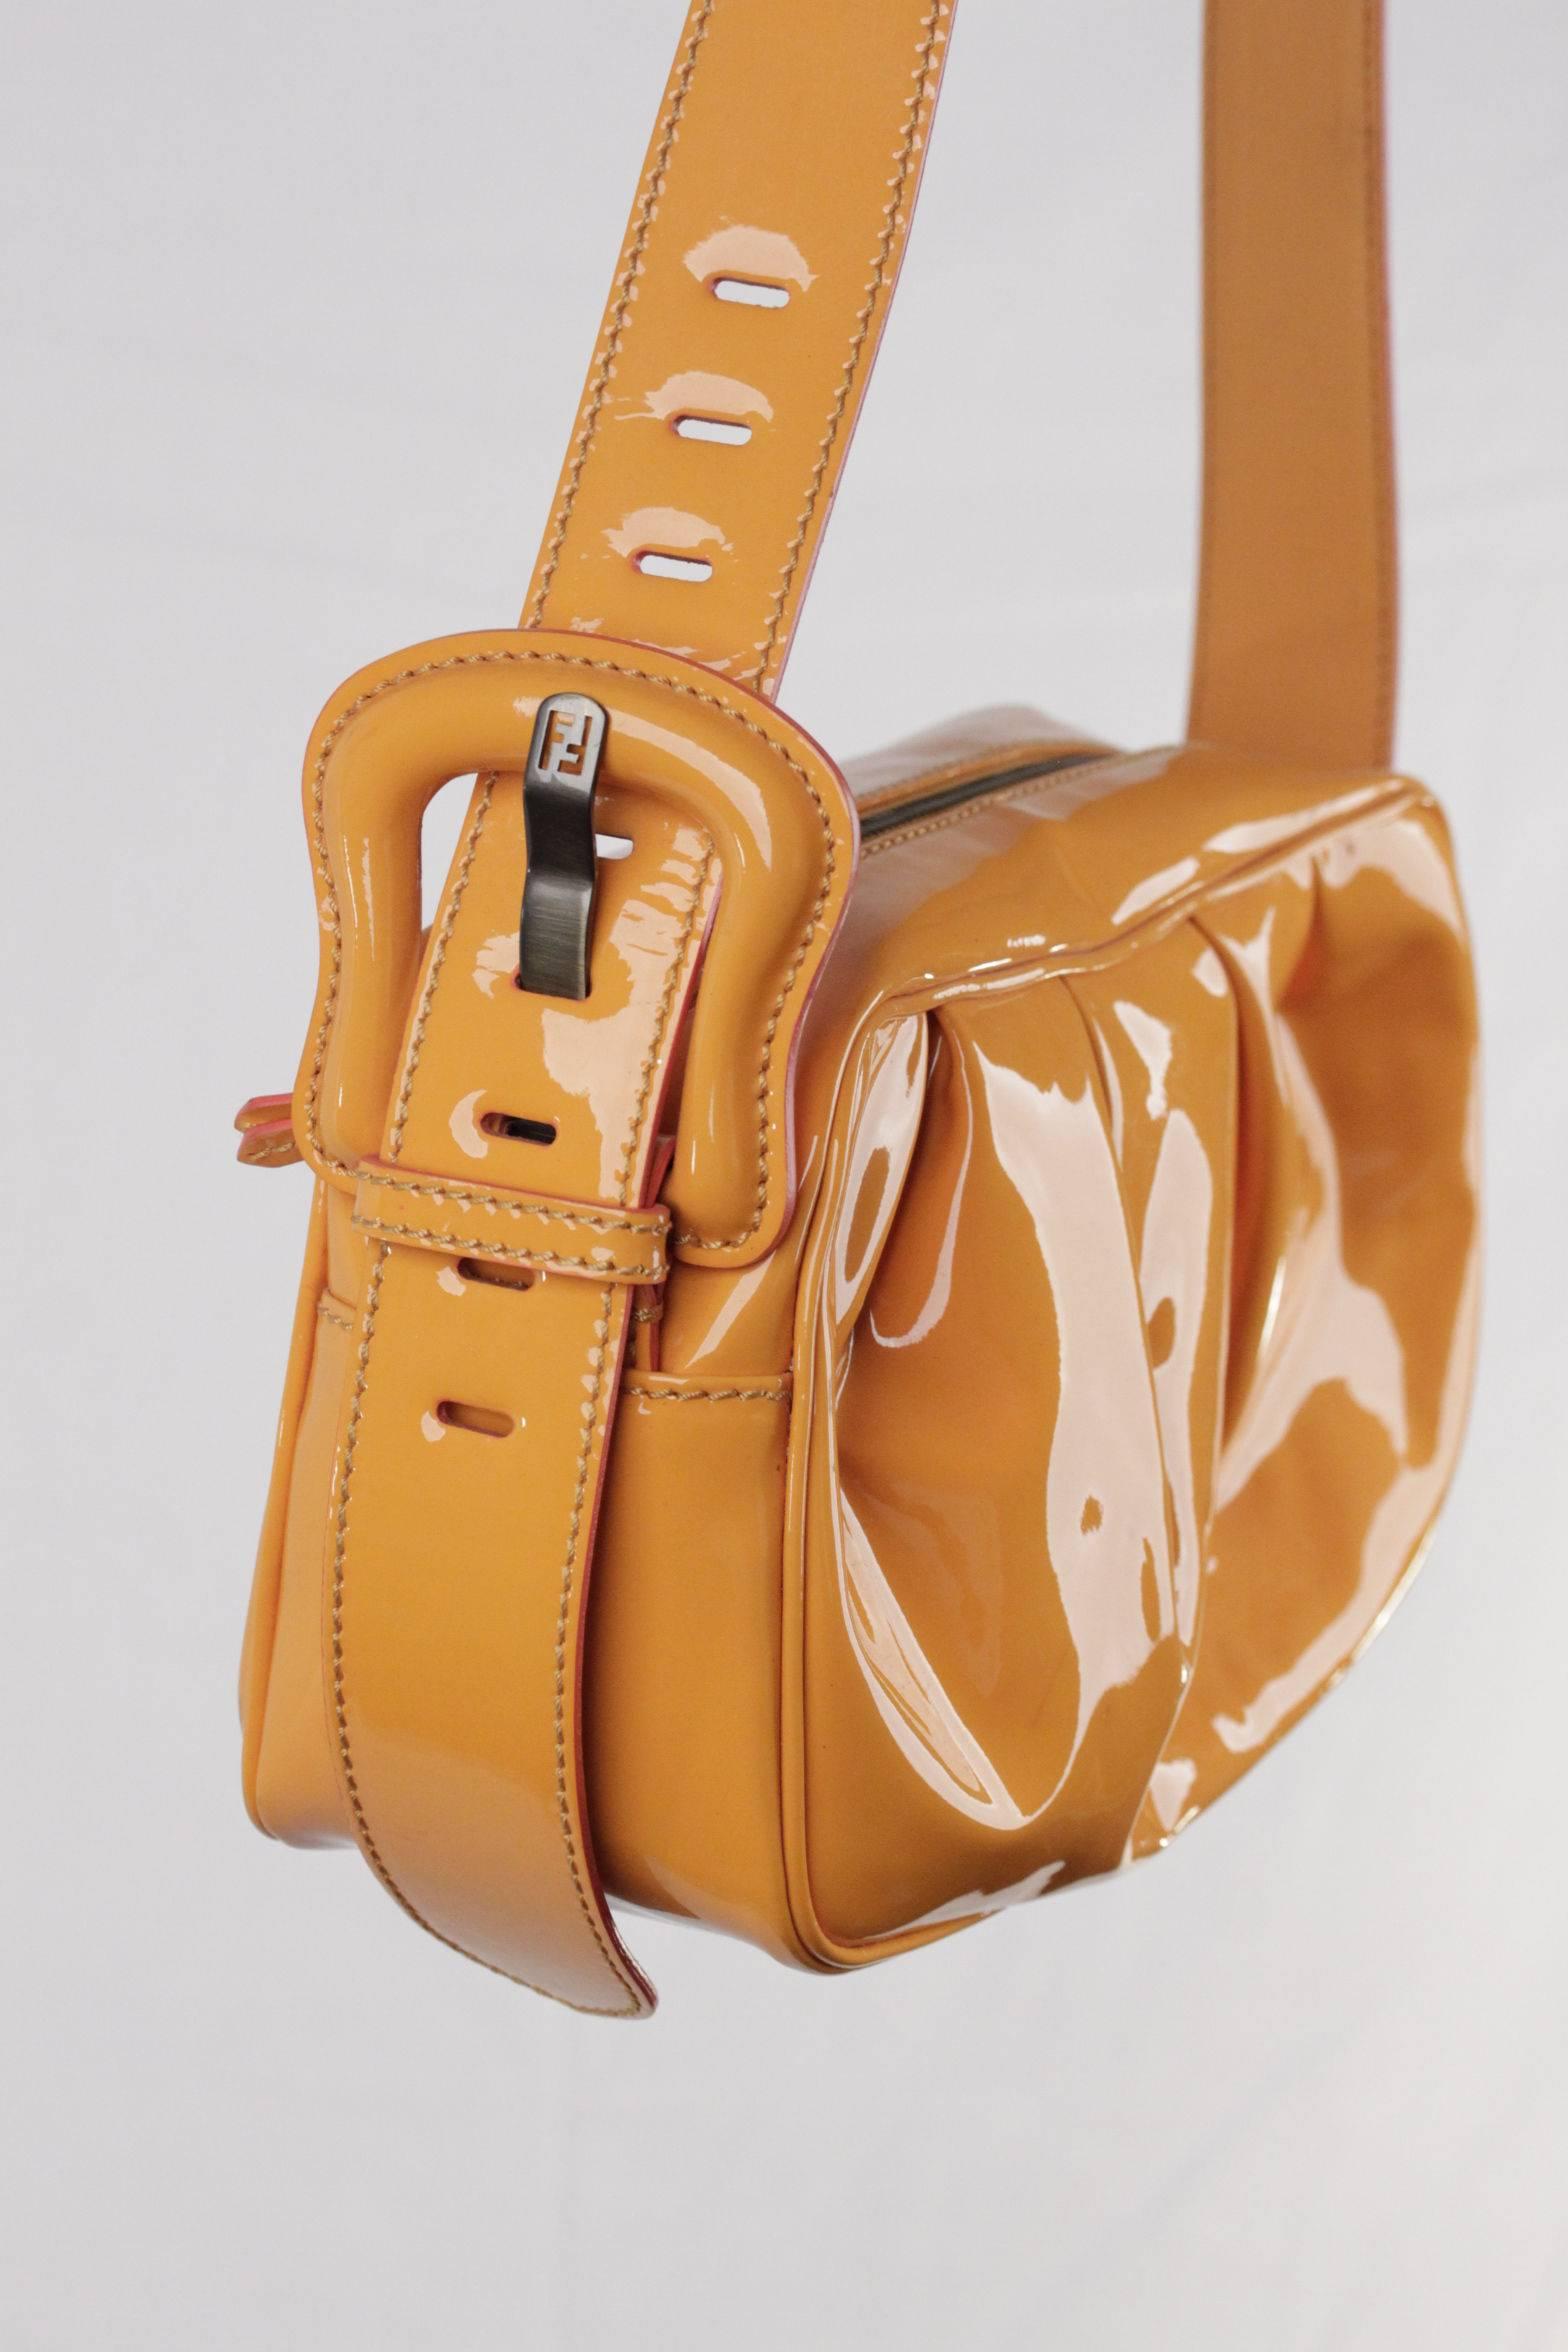 FENDI Orange Patent Leather Small CAMERA B BAG SHOULDER BAG Handbag In Good Condition In Rome, Rome